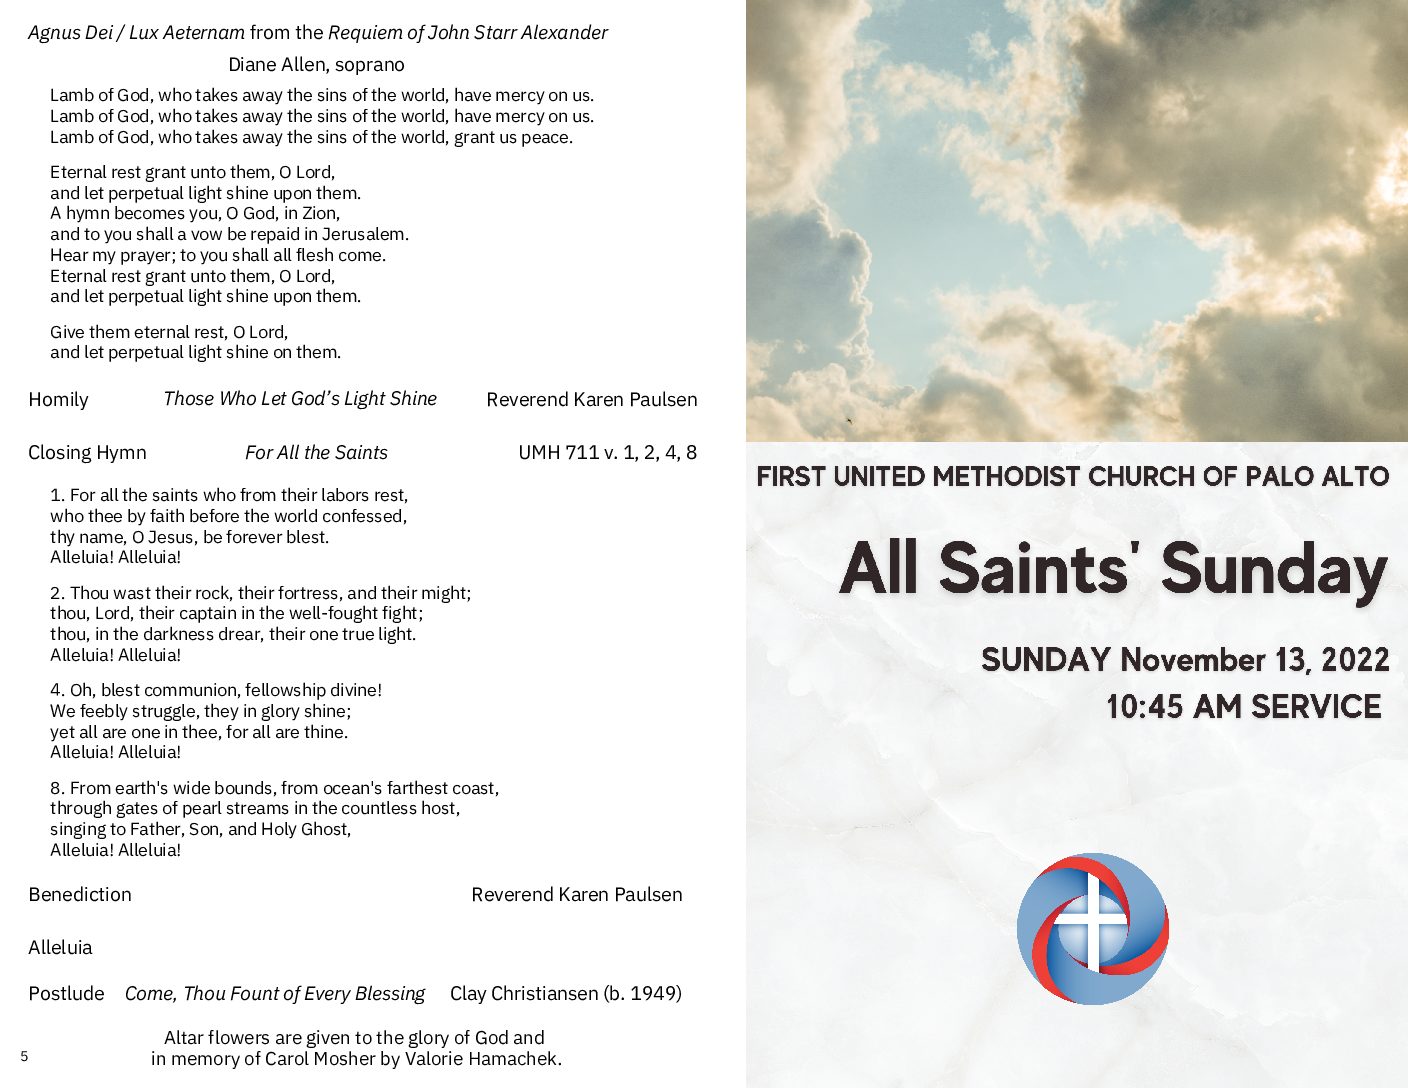 All-Saints-Worship-Bulletin-11.13.22-FINAL-3